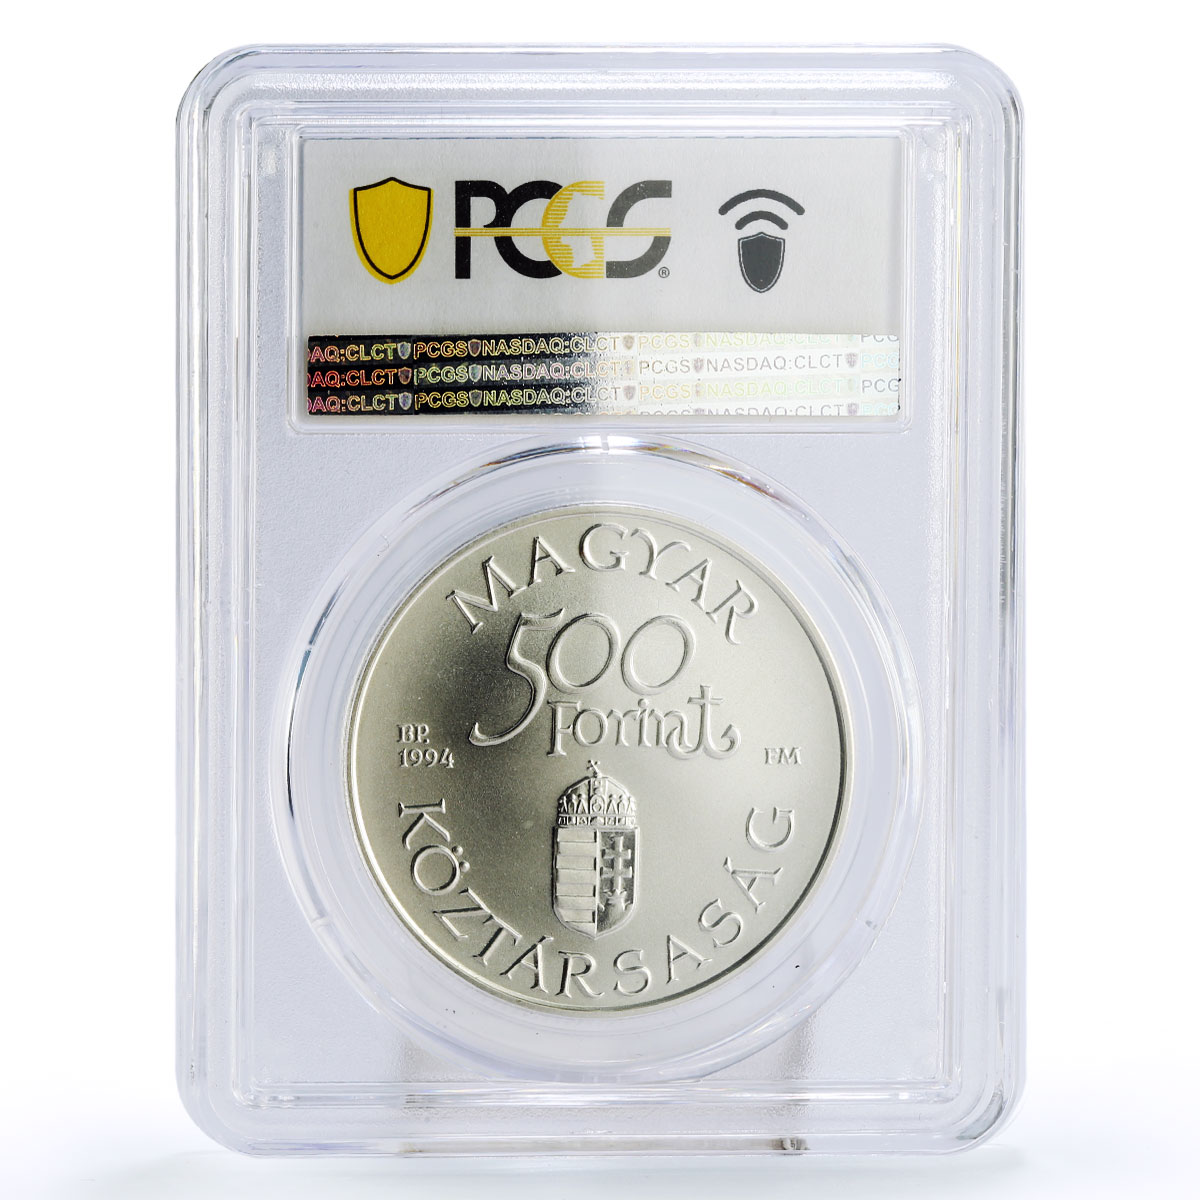 Hungary 1000 forint Old Danube Ship Carolina Steamer MS68 PCGS silver coin 1995